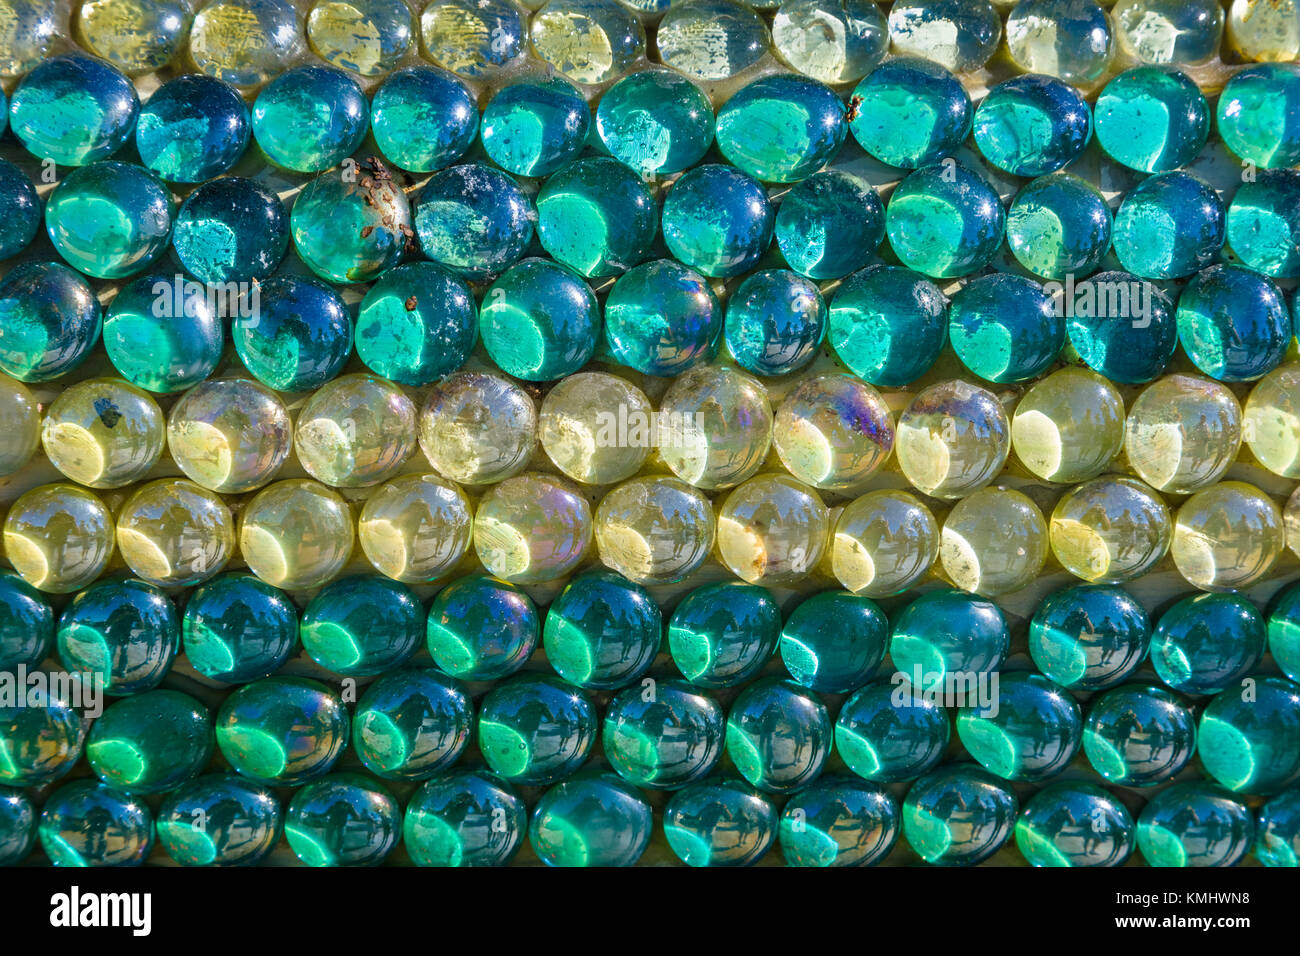 Closeup of aqua and white glass beads filling frame Stock Photo